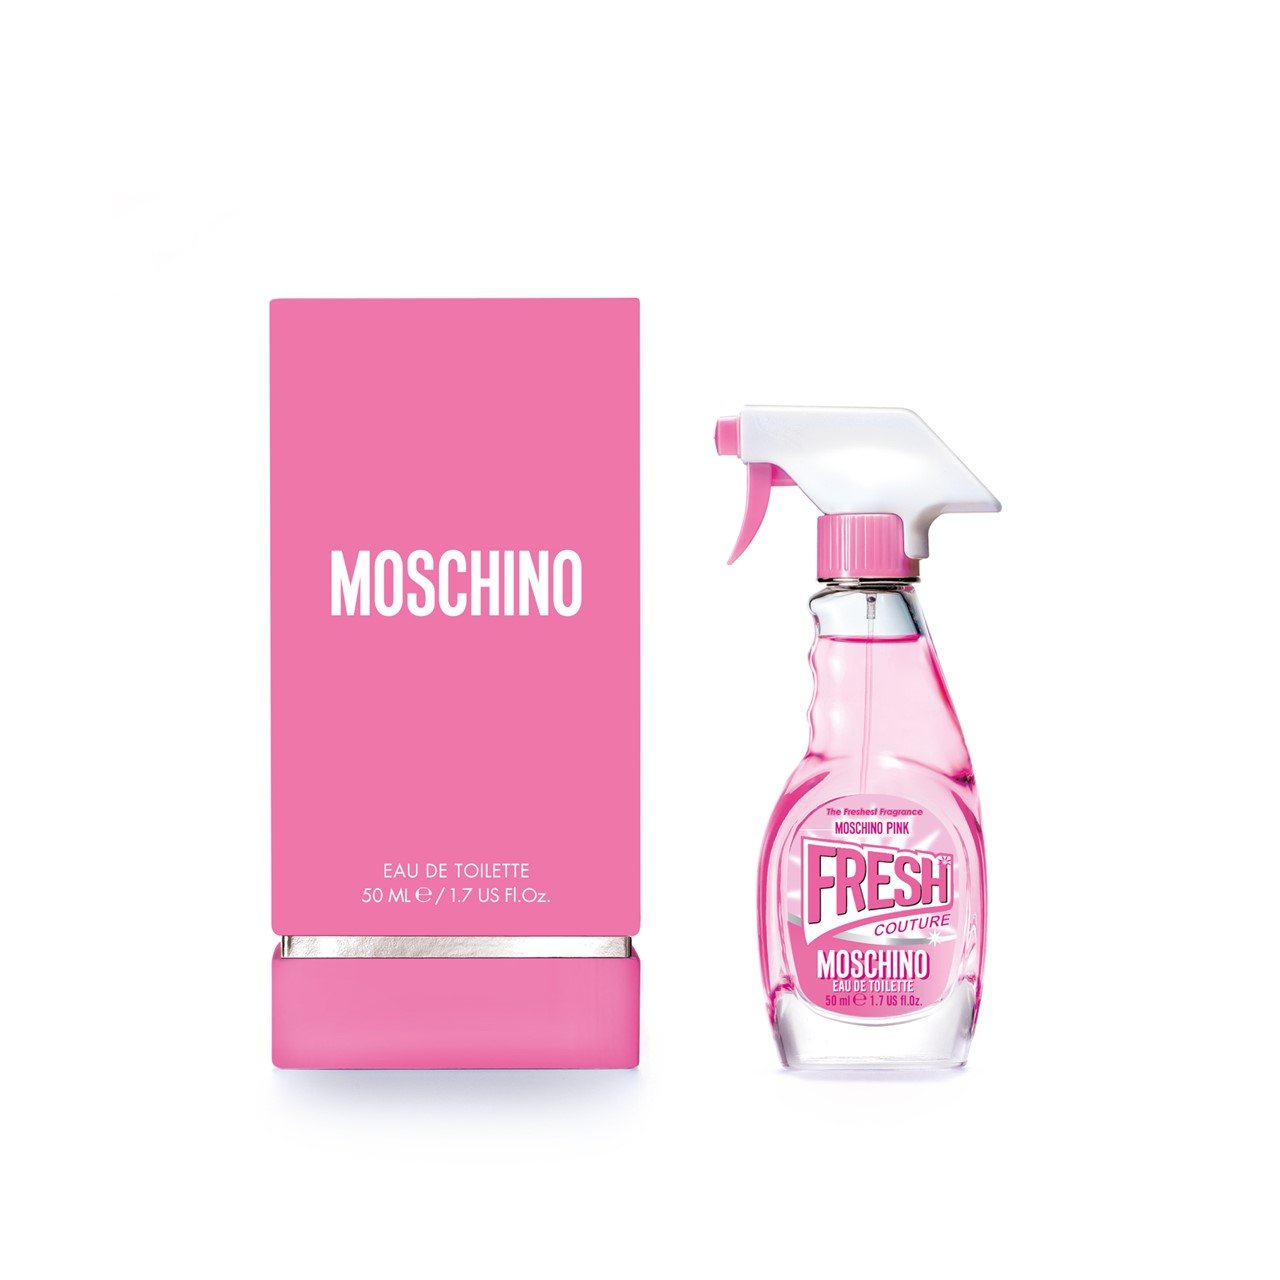 Moschino Pink Fresh Couture Eau de Toilette 50ml (1.7fl.oz.)